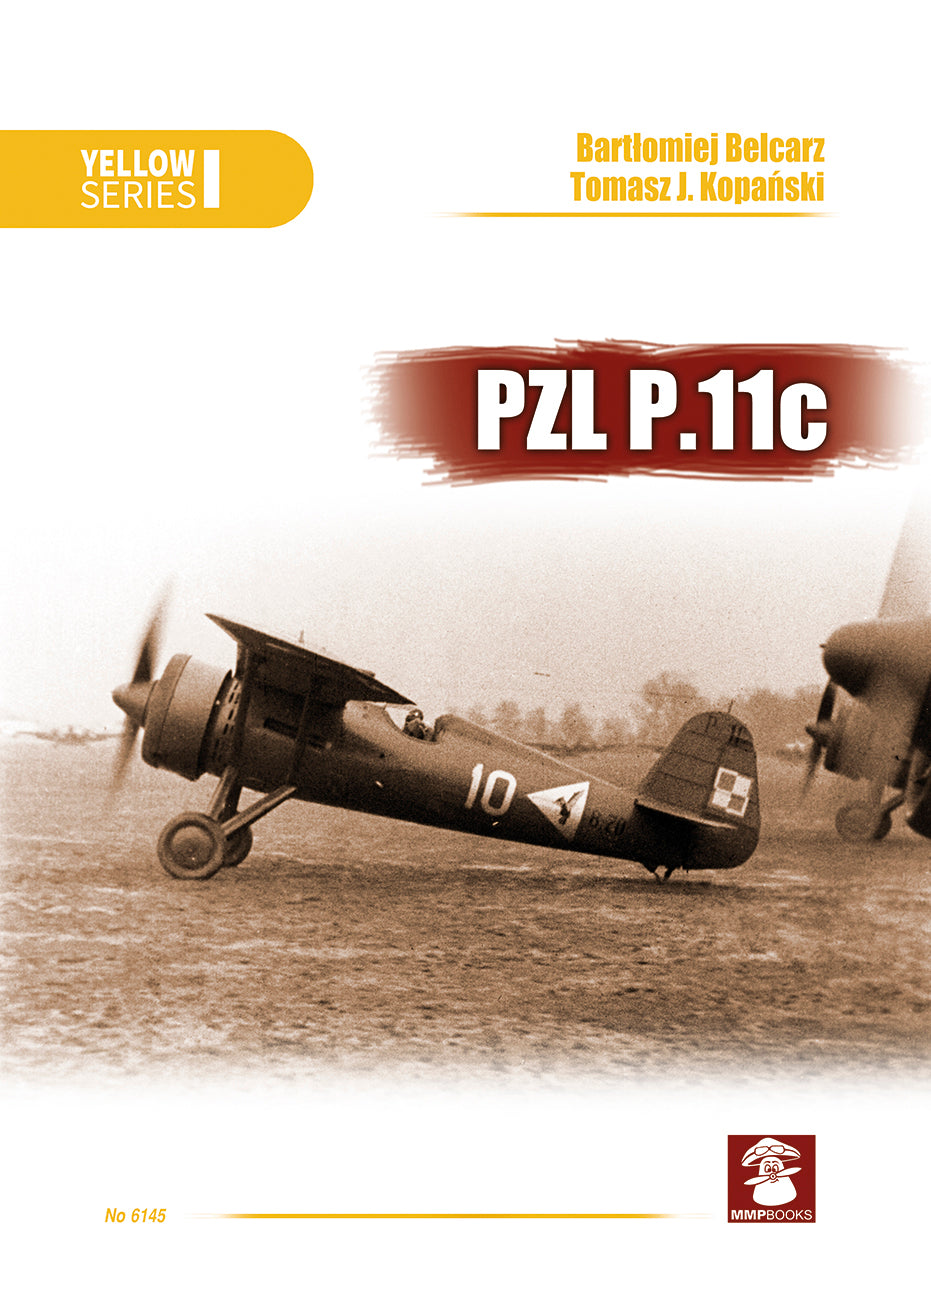 PZL P.11c